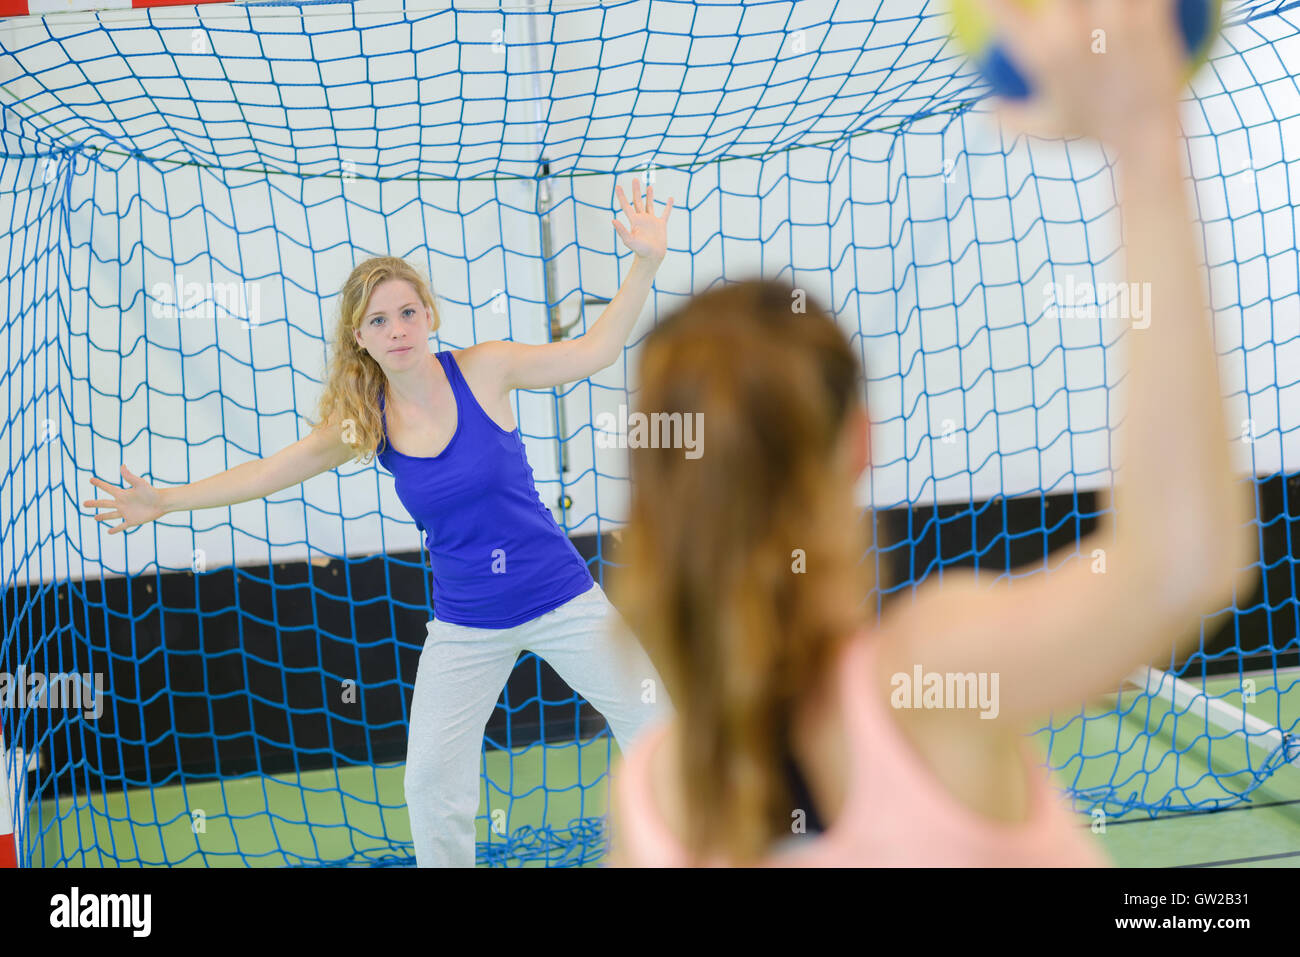 Woman defending handball goal Stock Photo